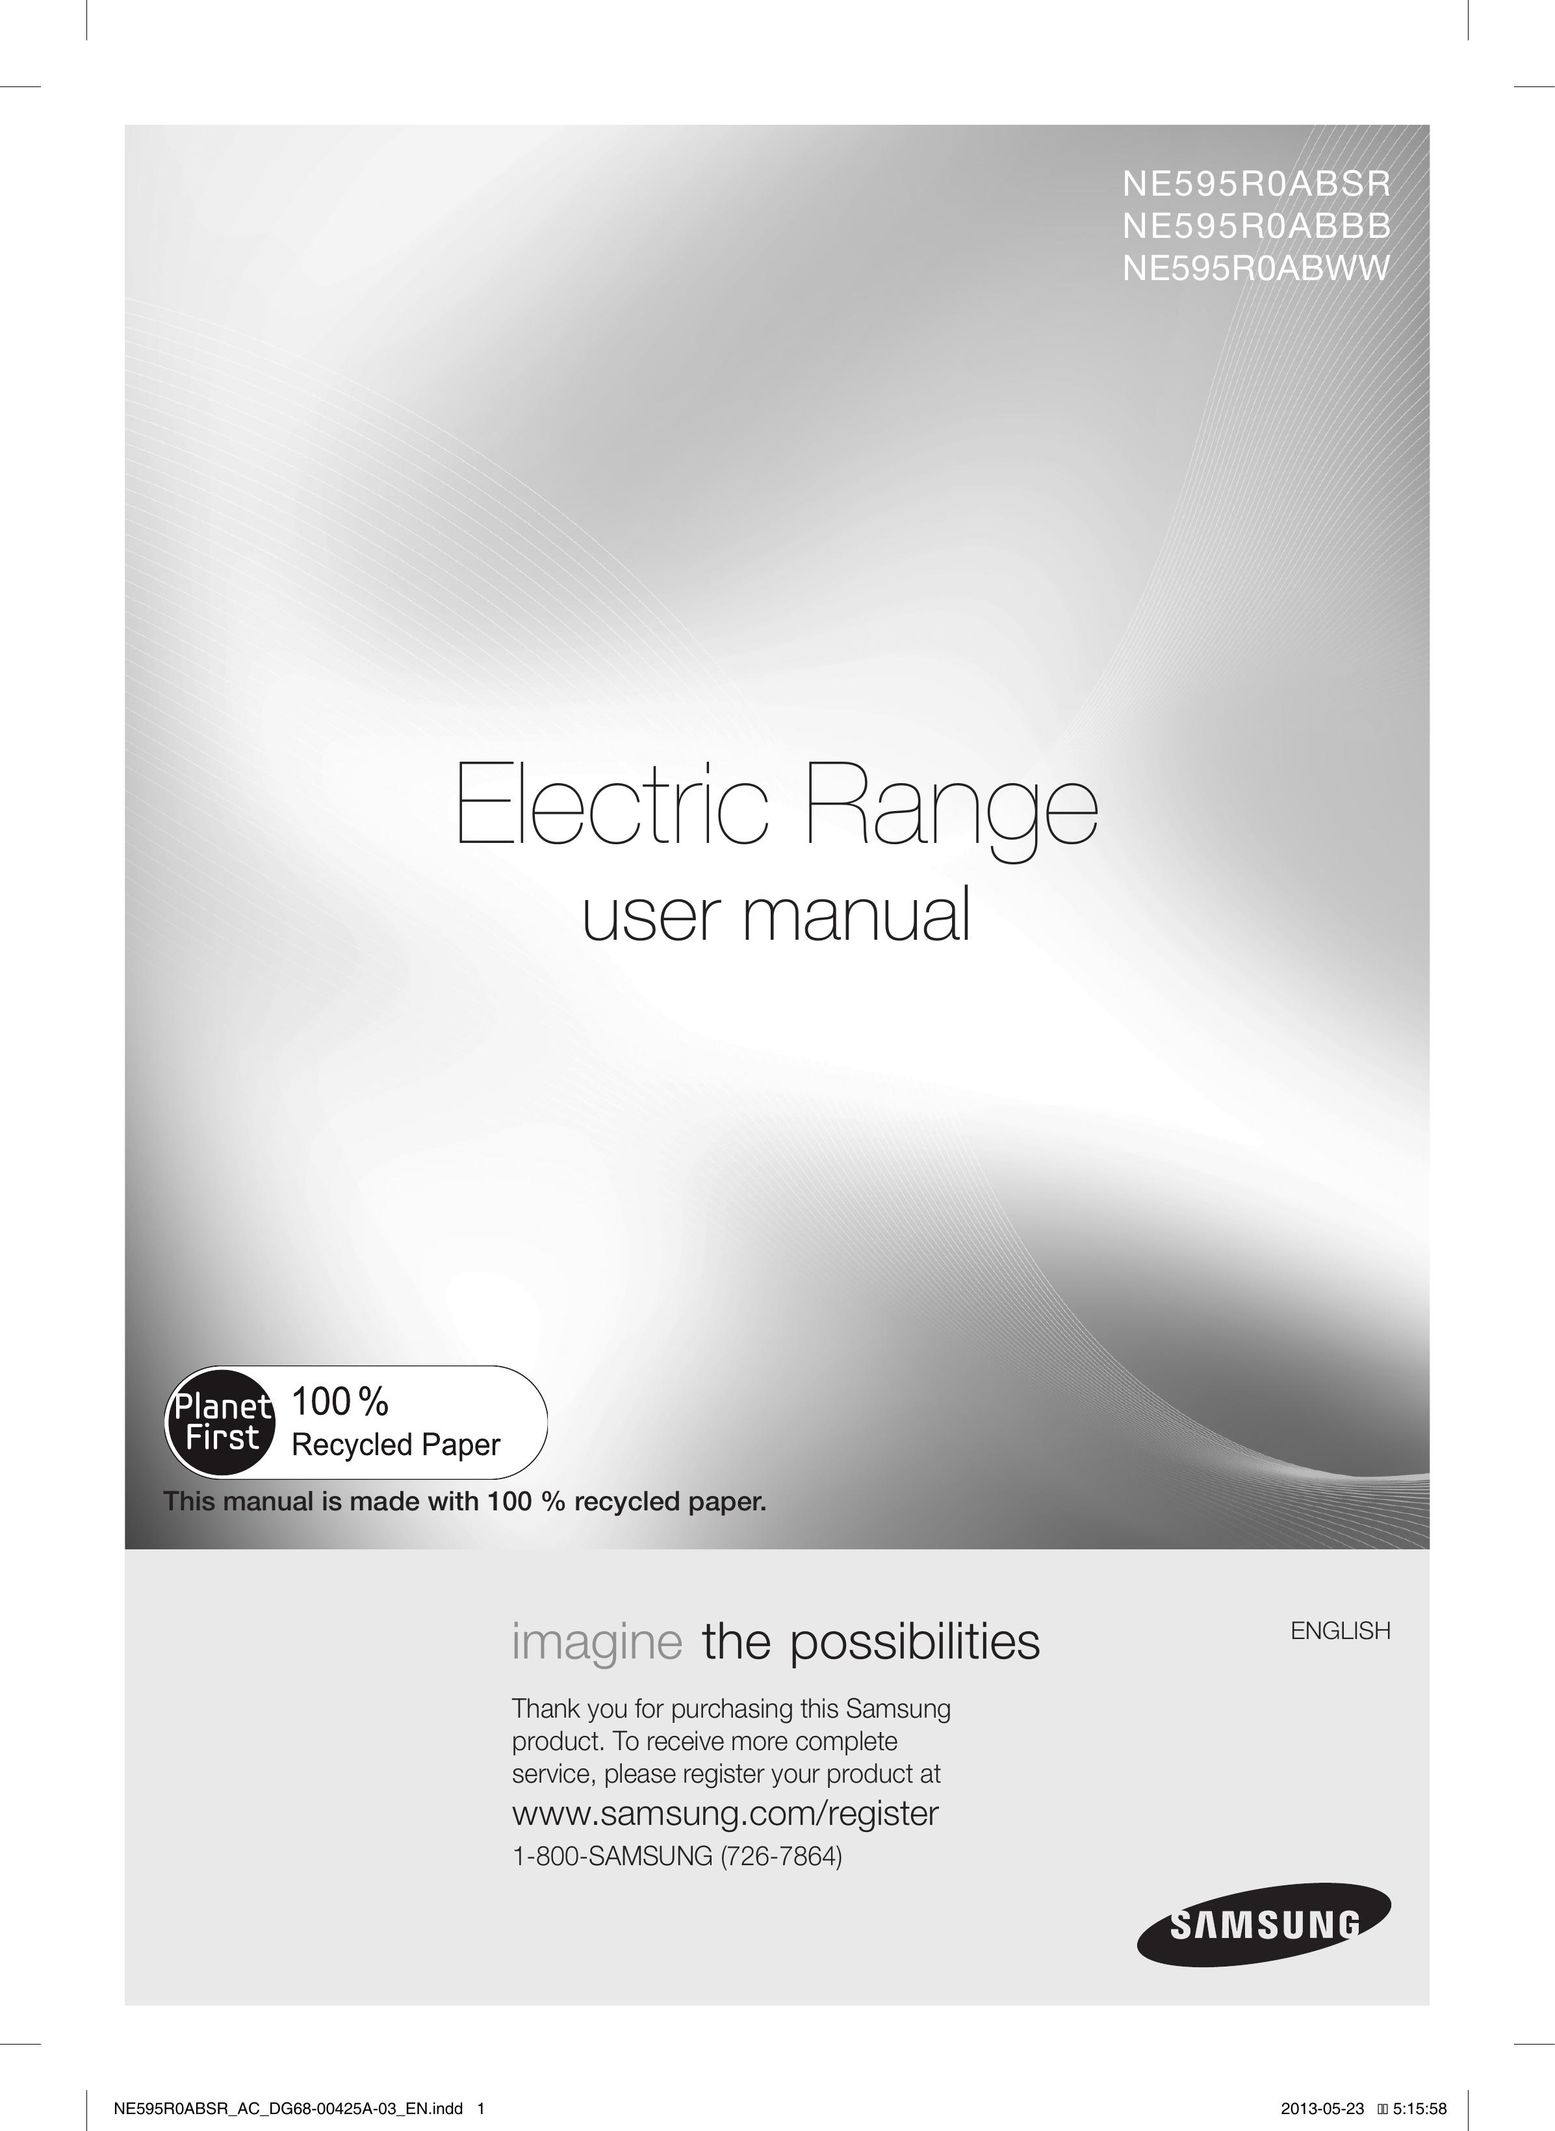 Samsung NE595R0ABWW Range User Manual